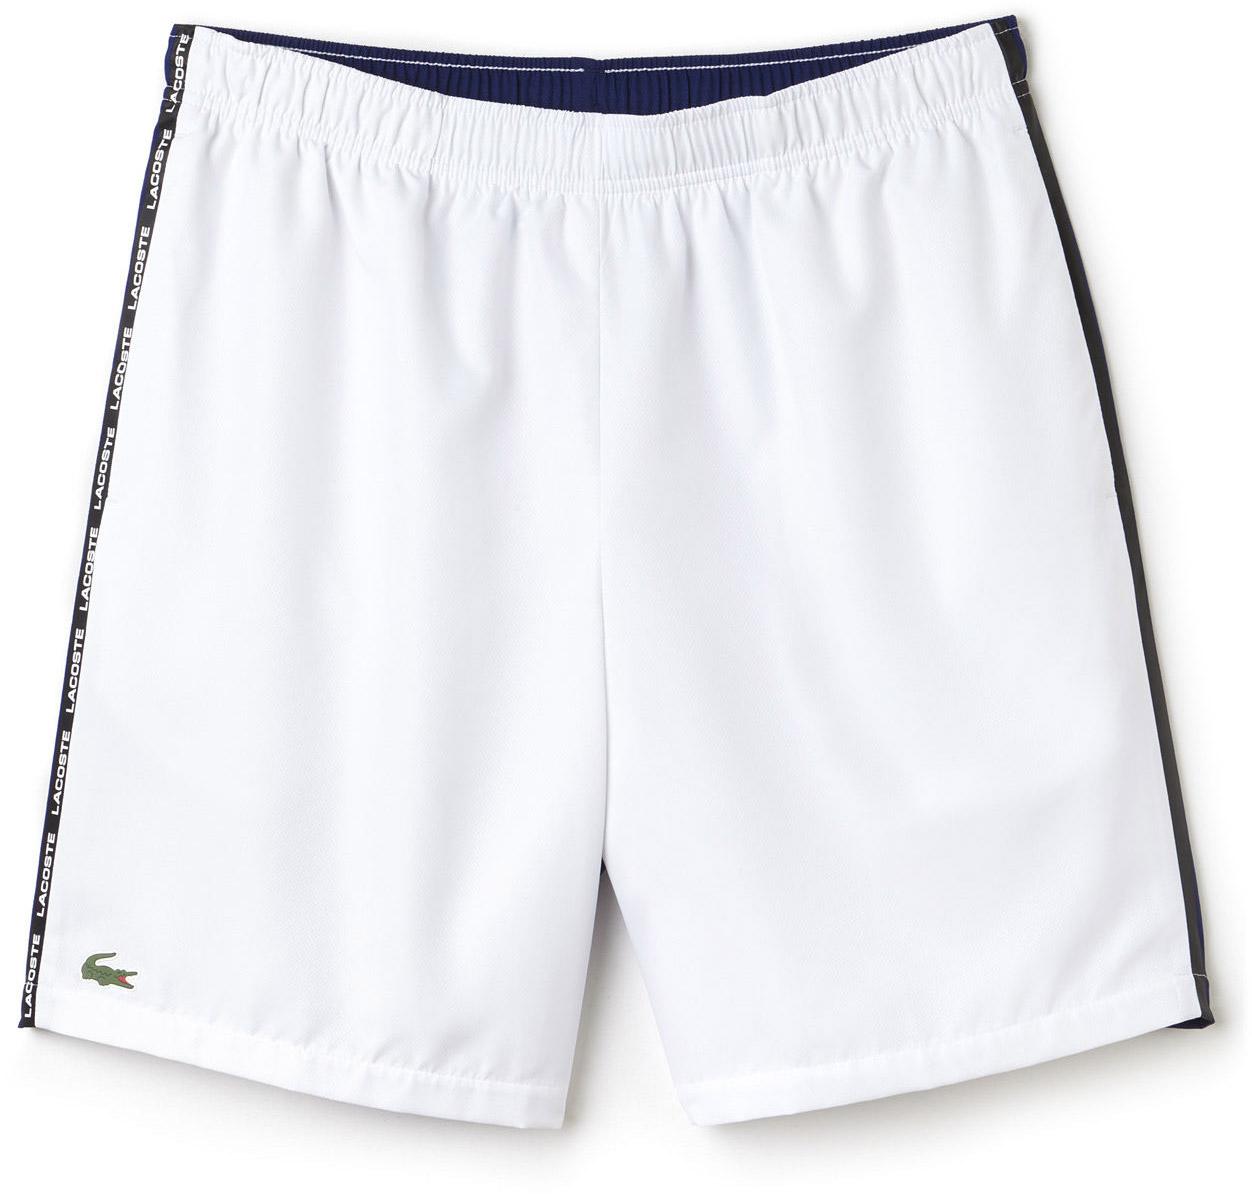 Lacoste Mens Colourblock Shorts - White/Ocean Blue - Tennisnuts.com